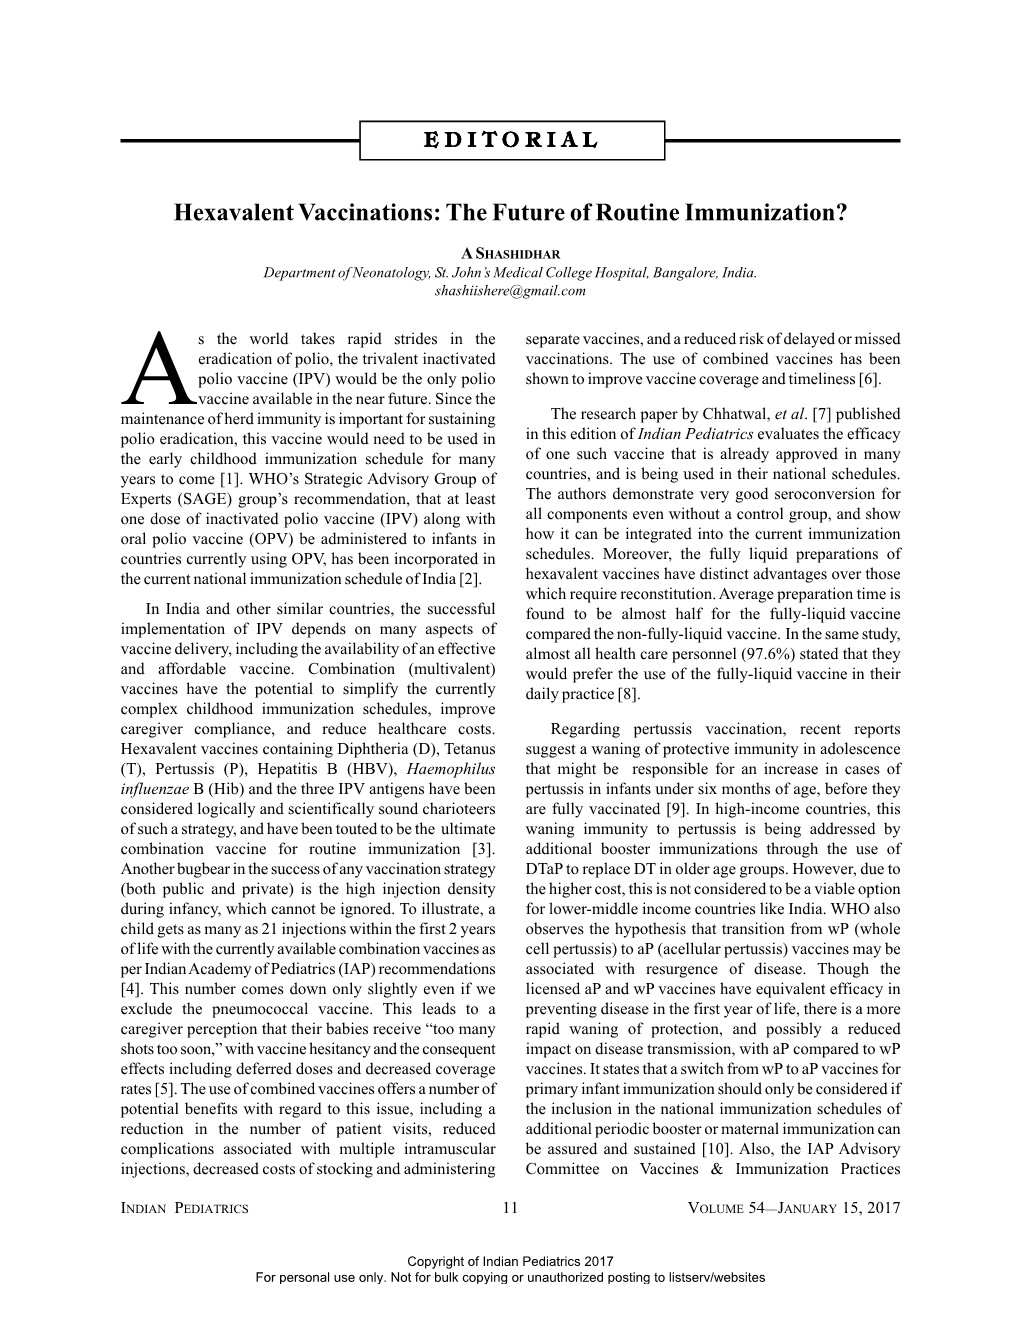 Hexavalent Vaccinations: the Future of Routine Immunization?